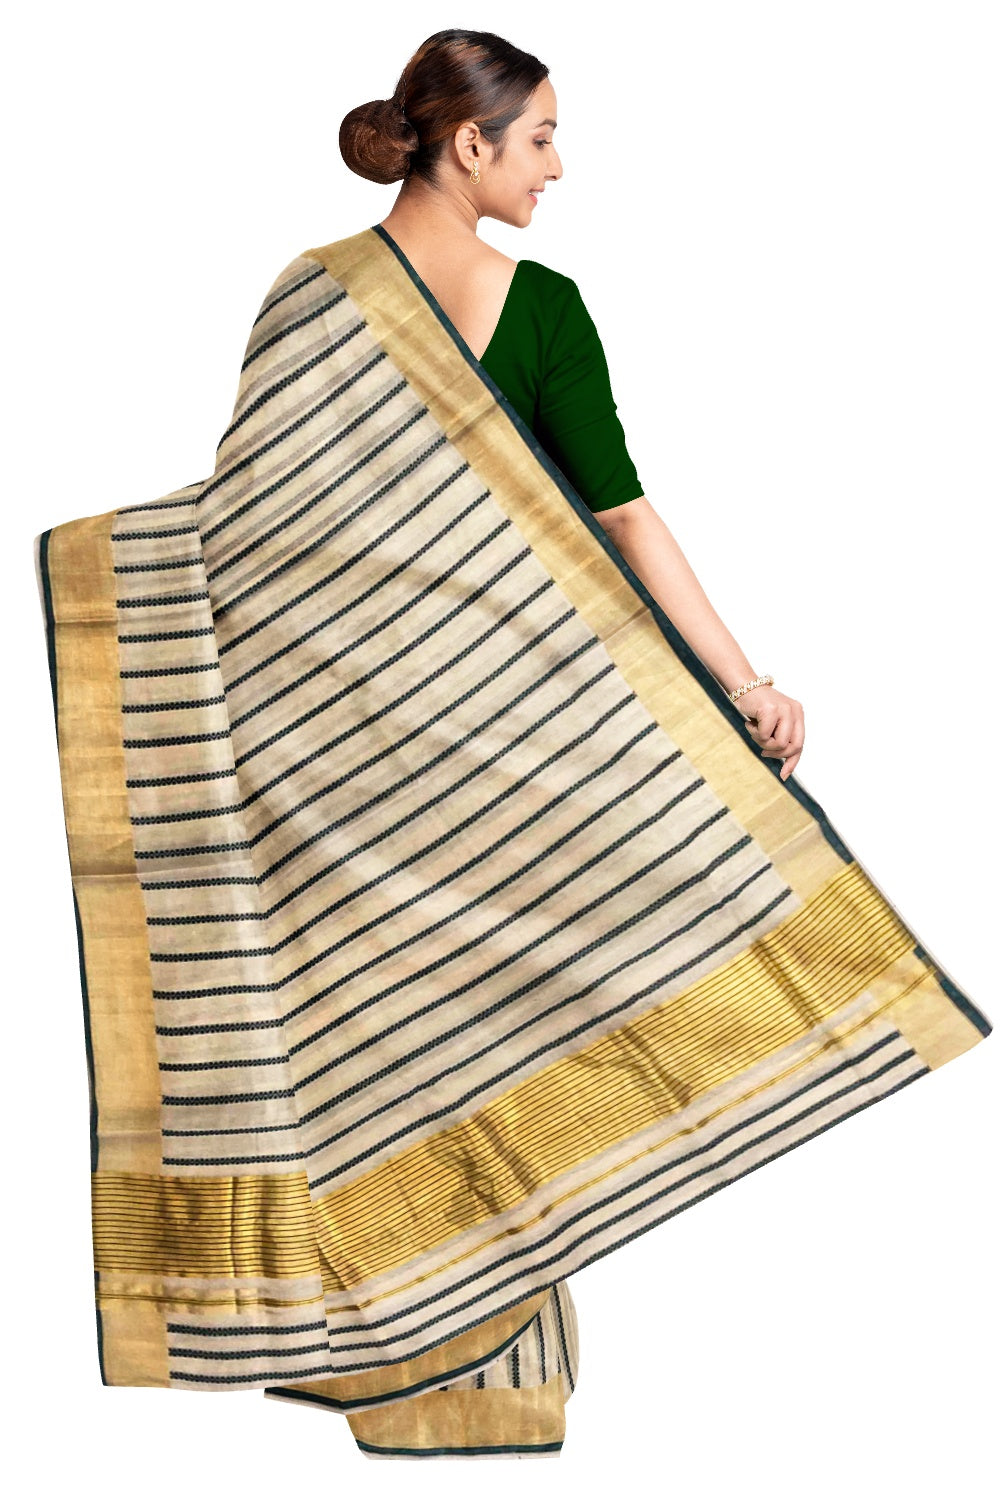 Southloom Kuthampully Handloom Tissue Saree with Kasavu and Green Stripes Body